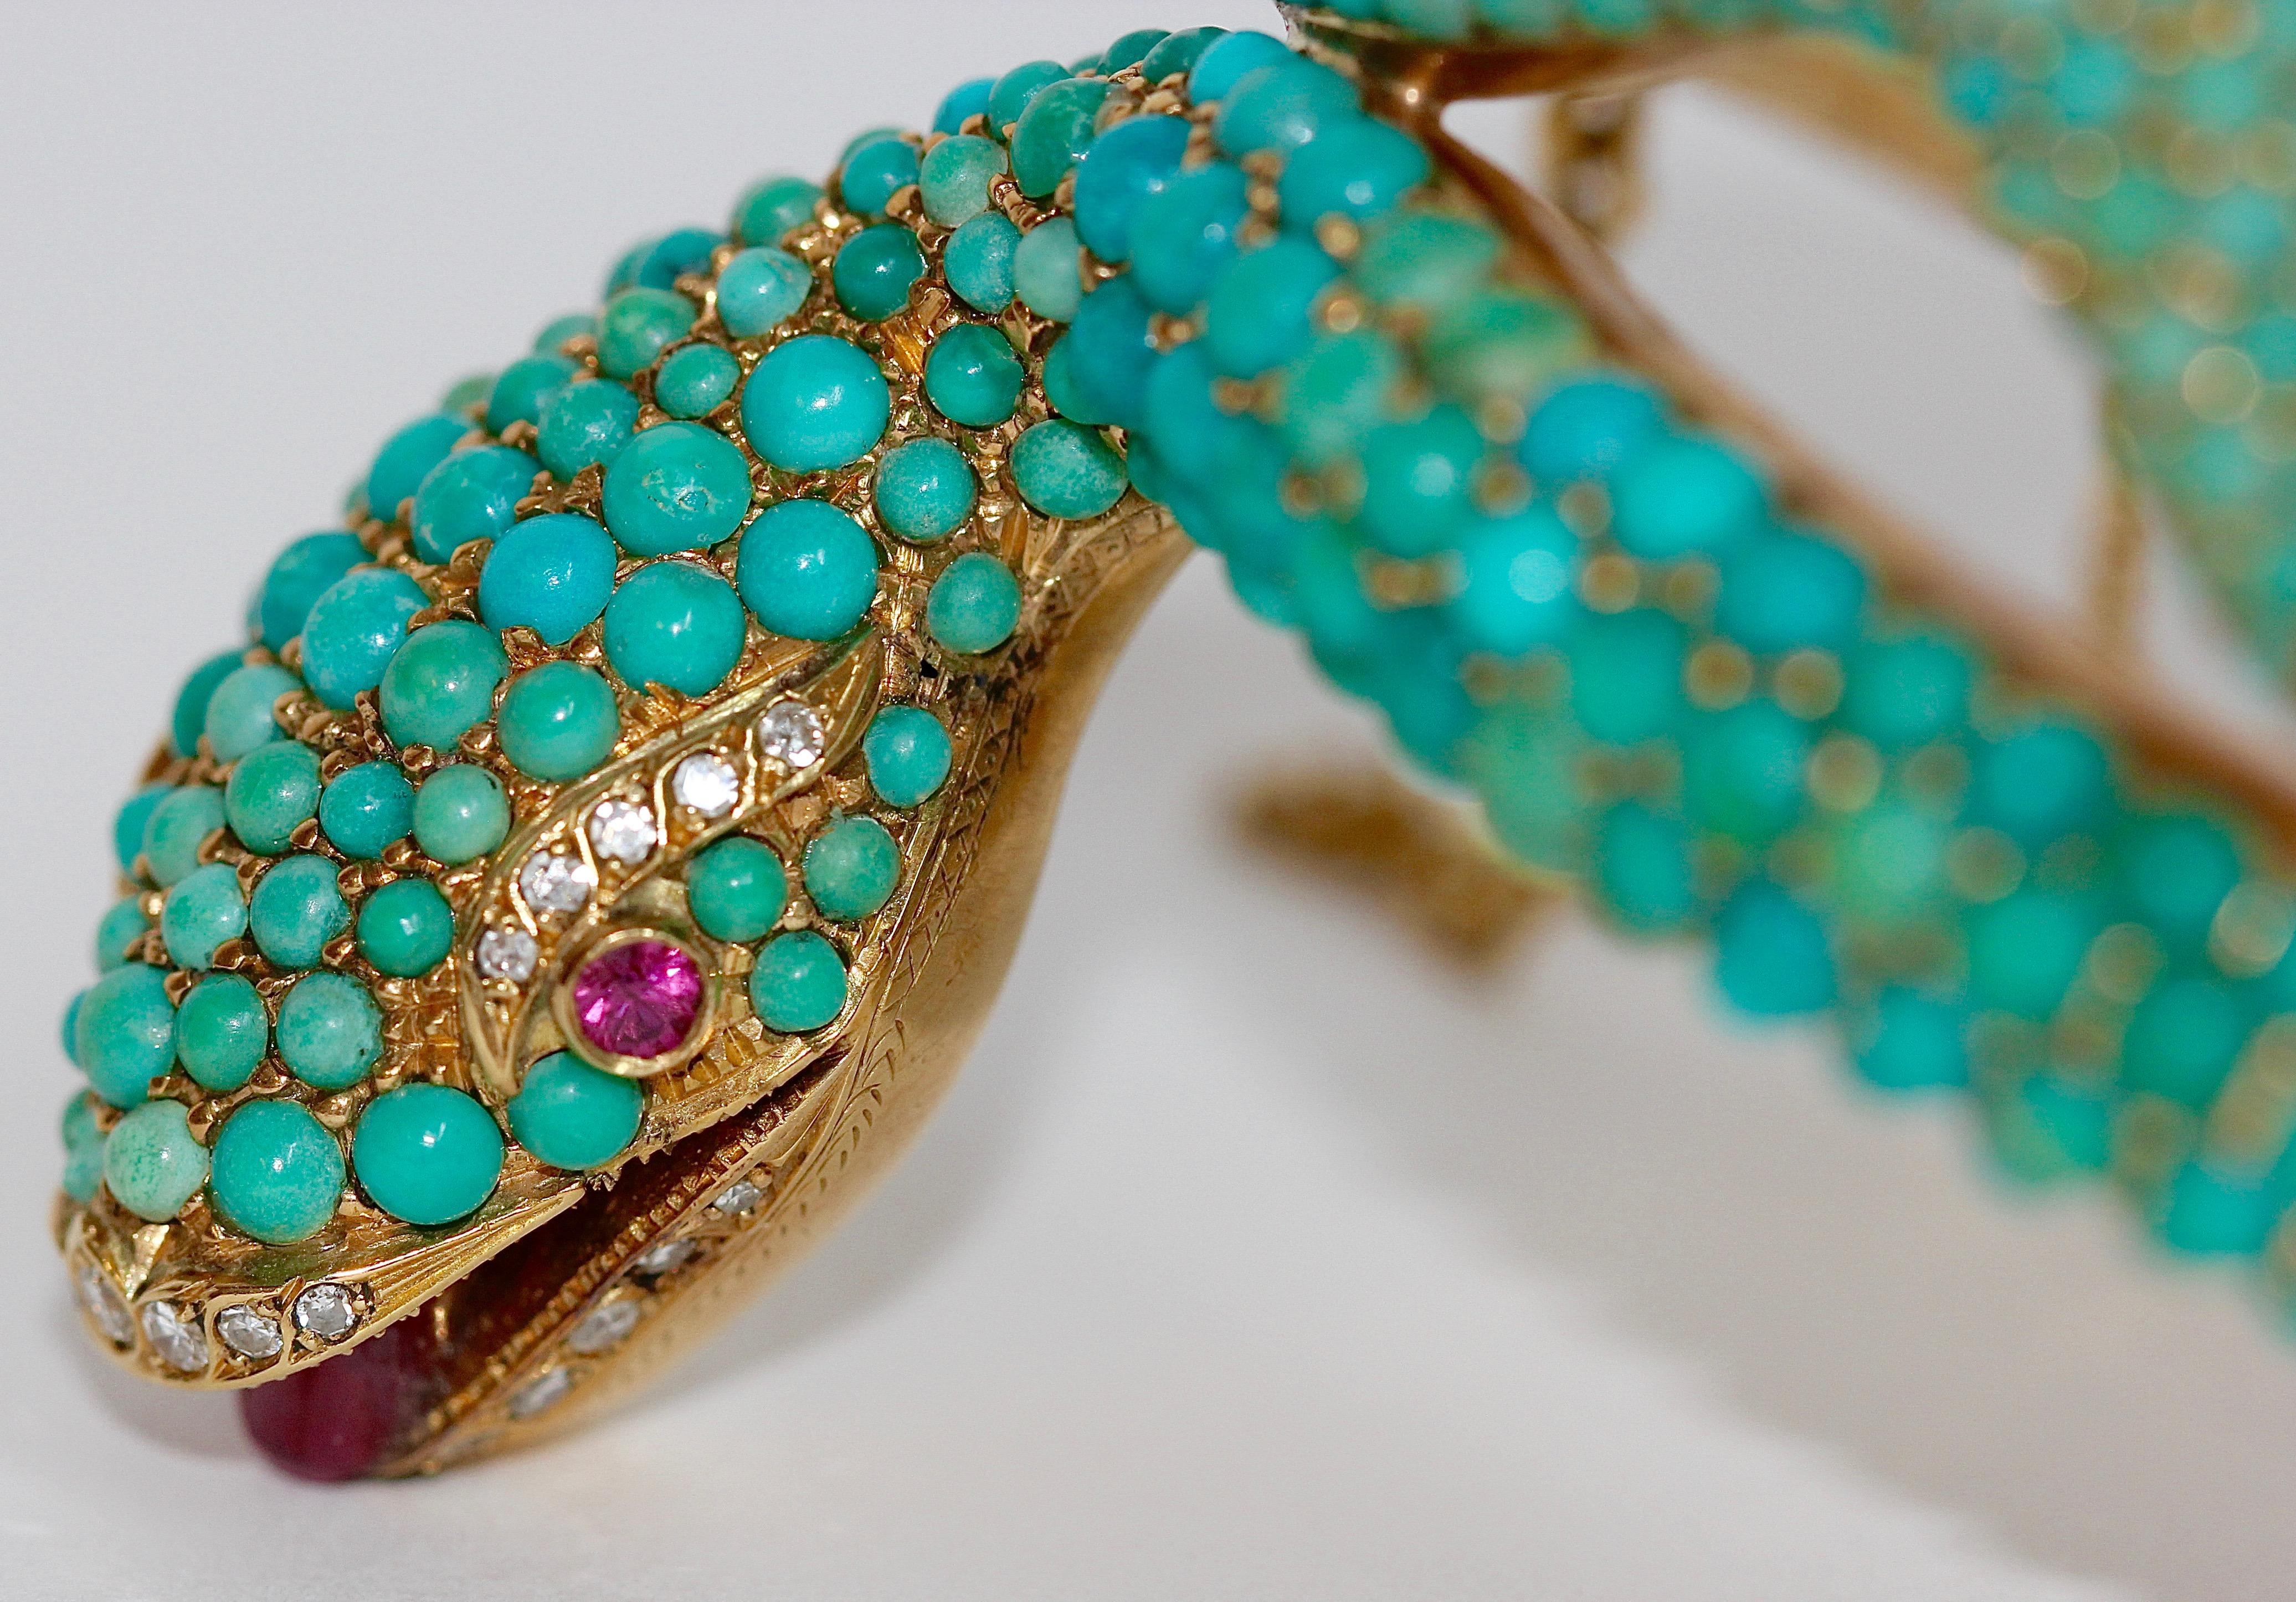 18 Karat Gold Snake Bracelet Bangle Set with Turquoise, Diamonds and Rubies For Sale 1